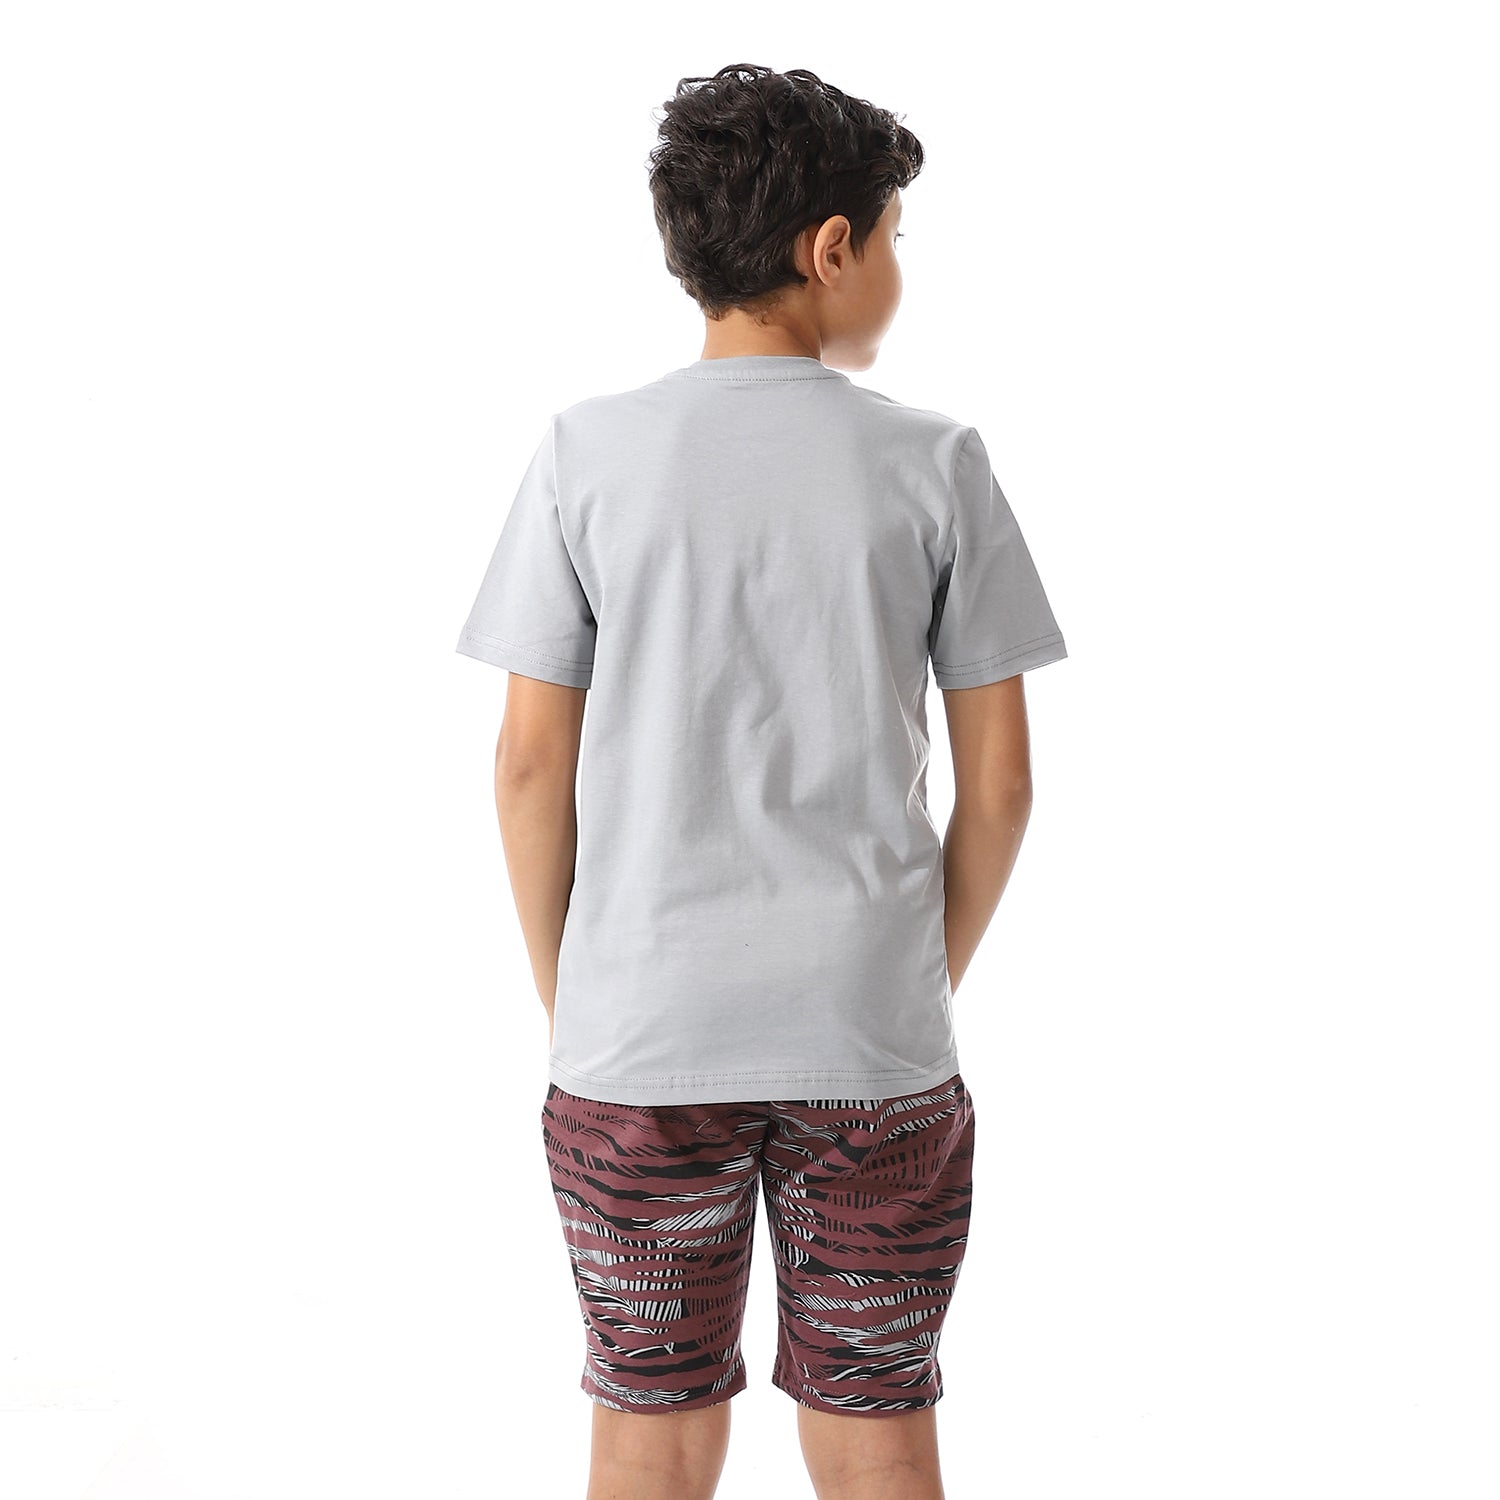 Boys Printed Colorful Summer & Shorts Pajama Set - Grey & Burgundy